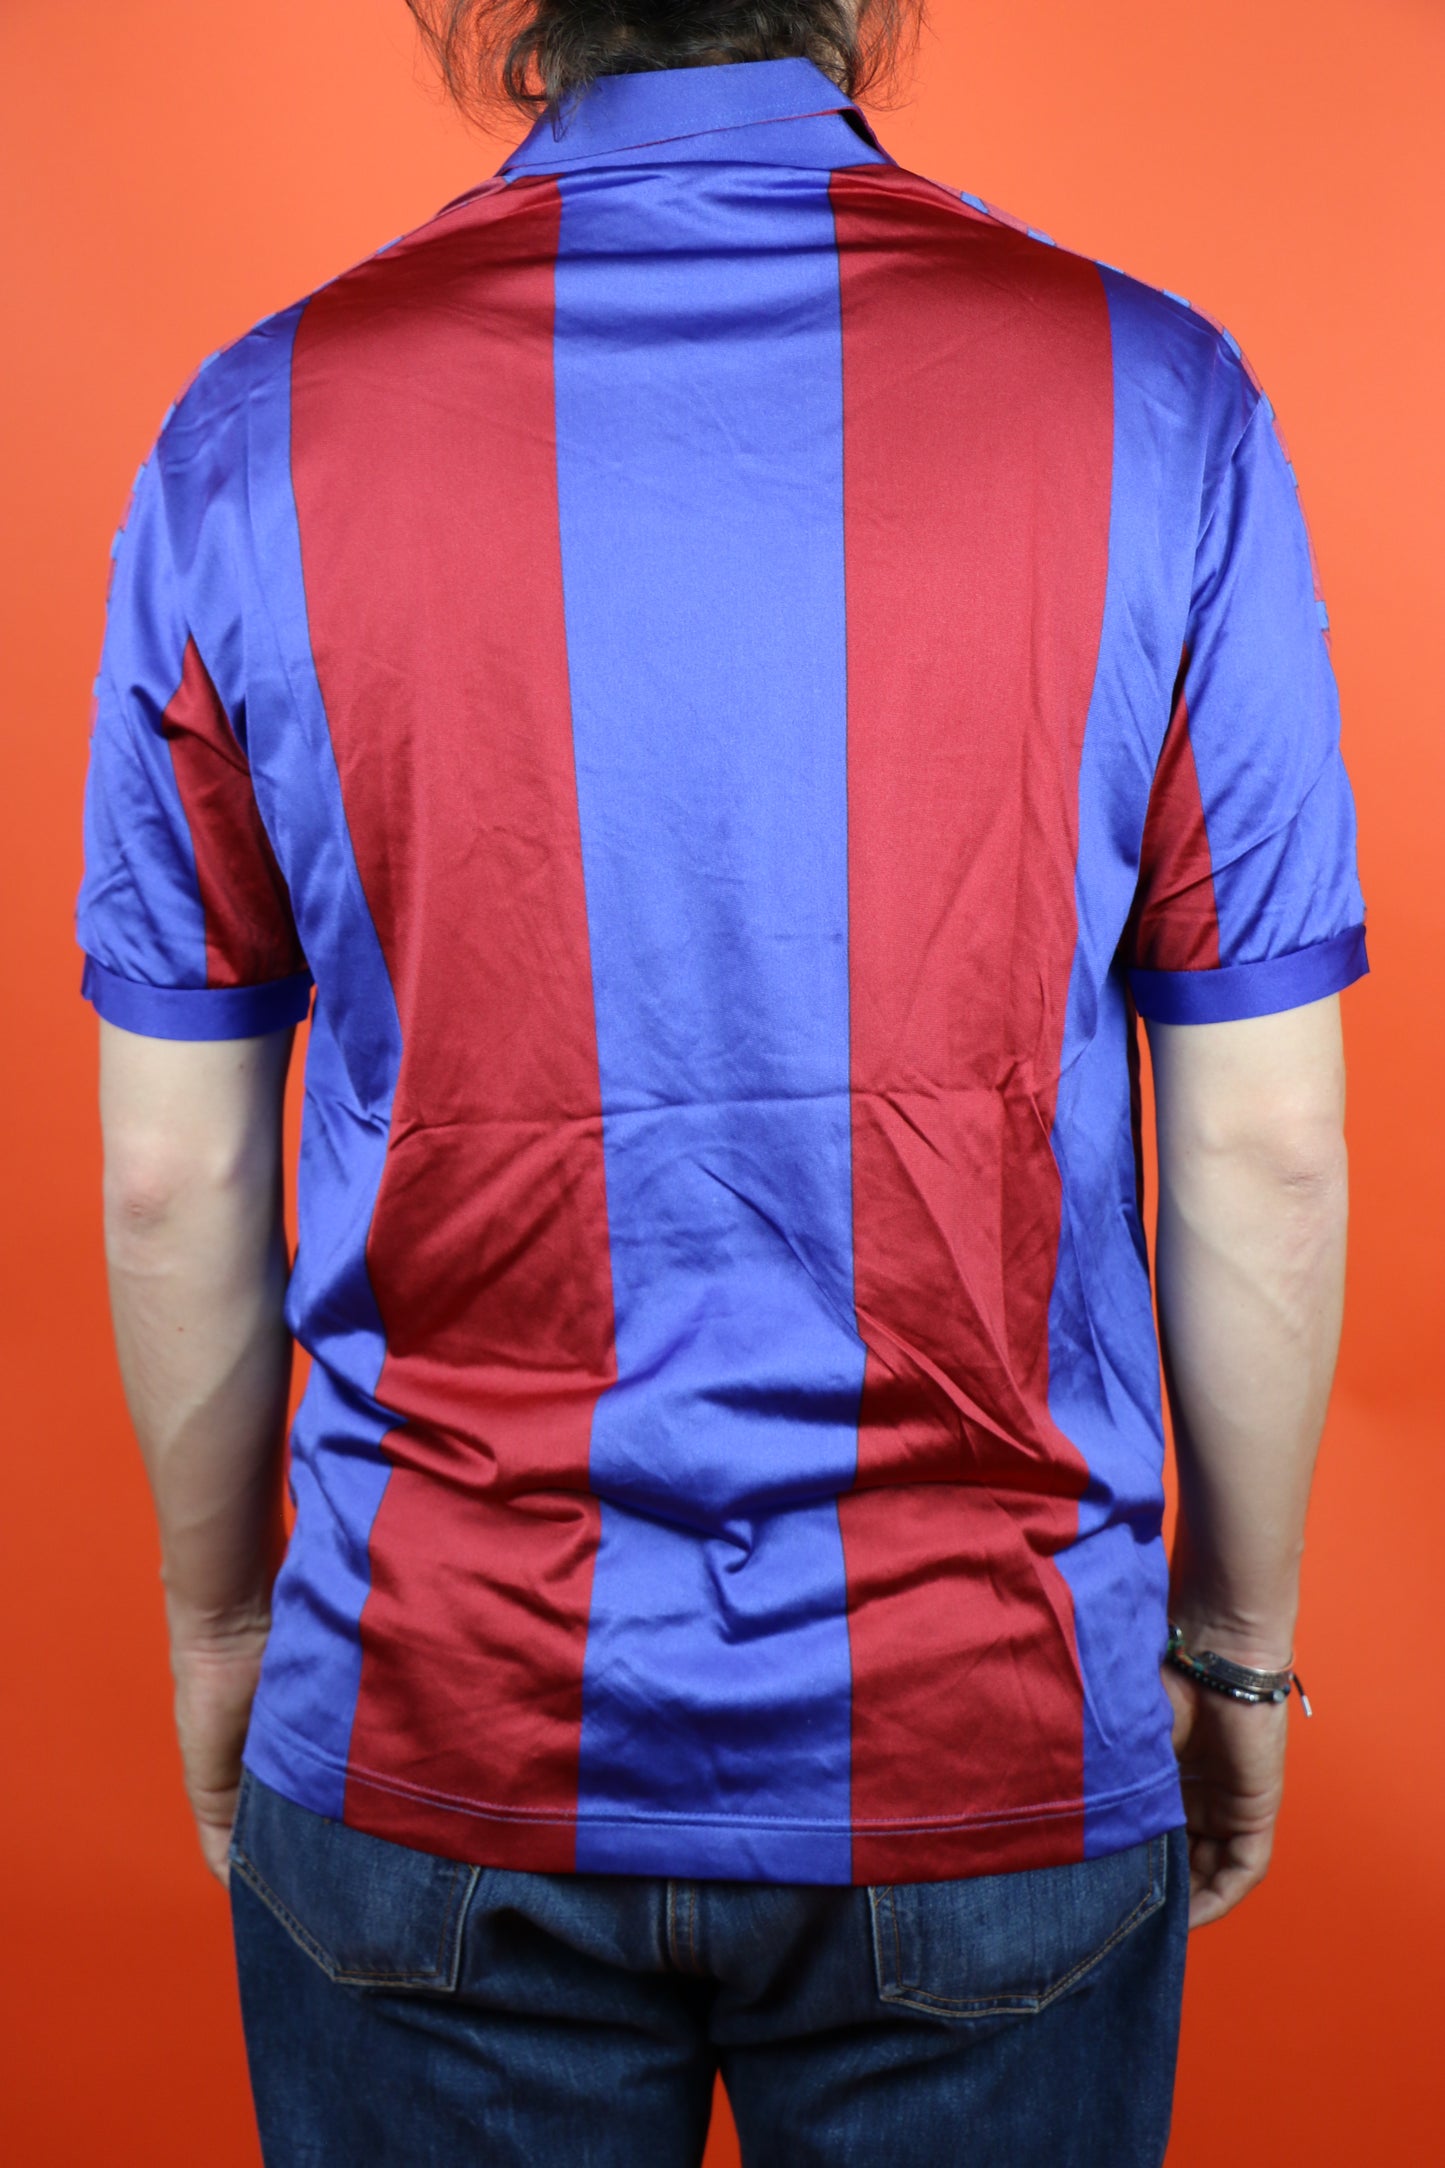 Barcelona Football Jersey 1986 - vintage clothing clochard92.com